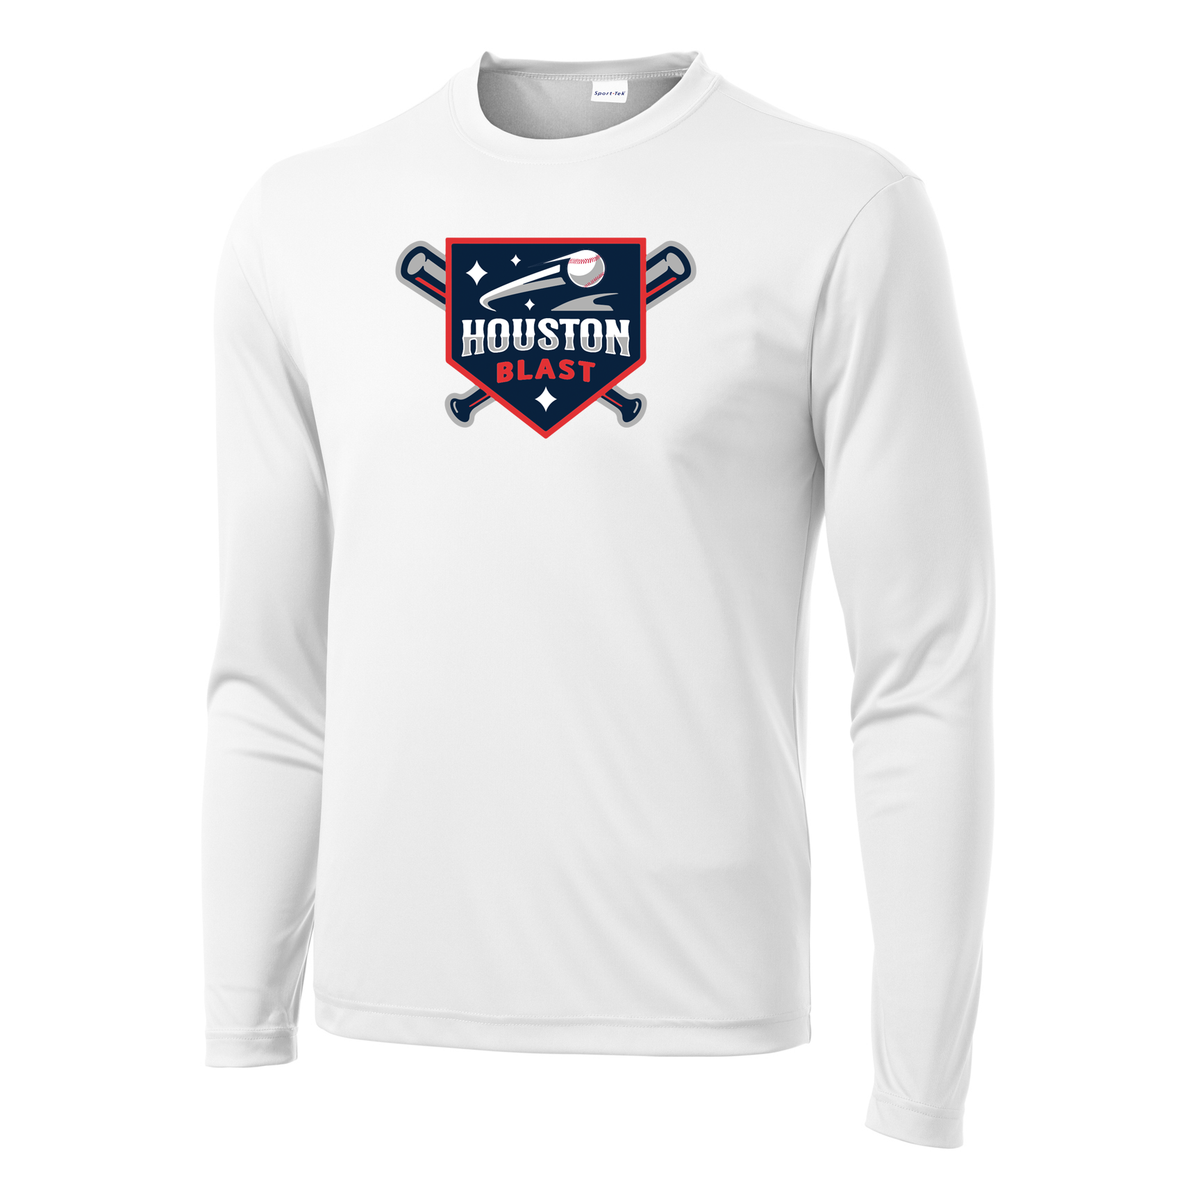 Houston Blast Baseball Long Sleeve Performance Shirt